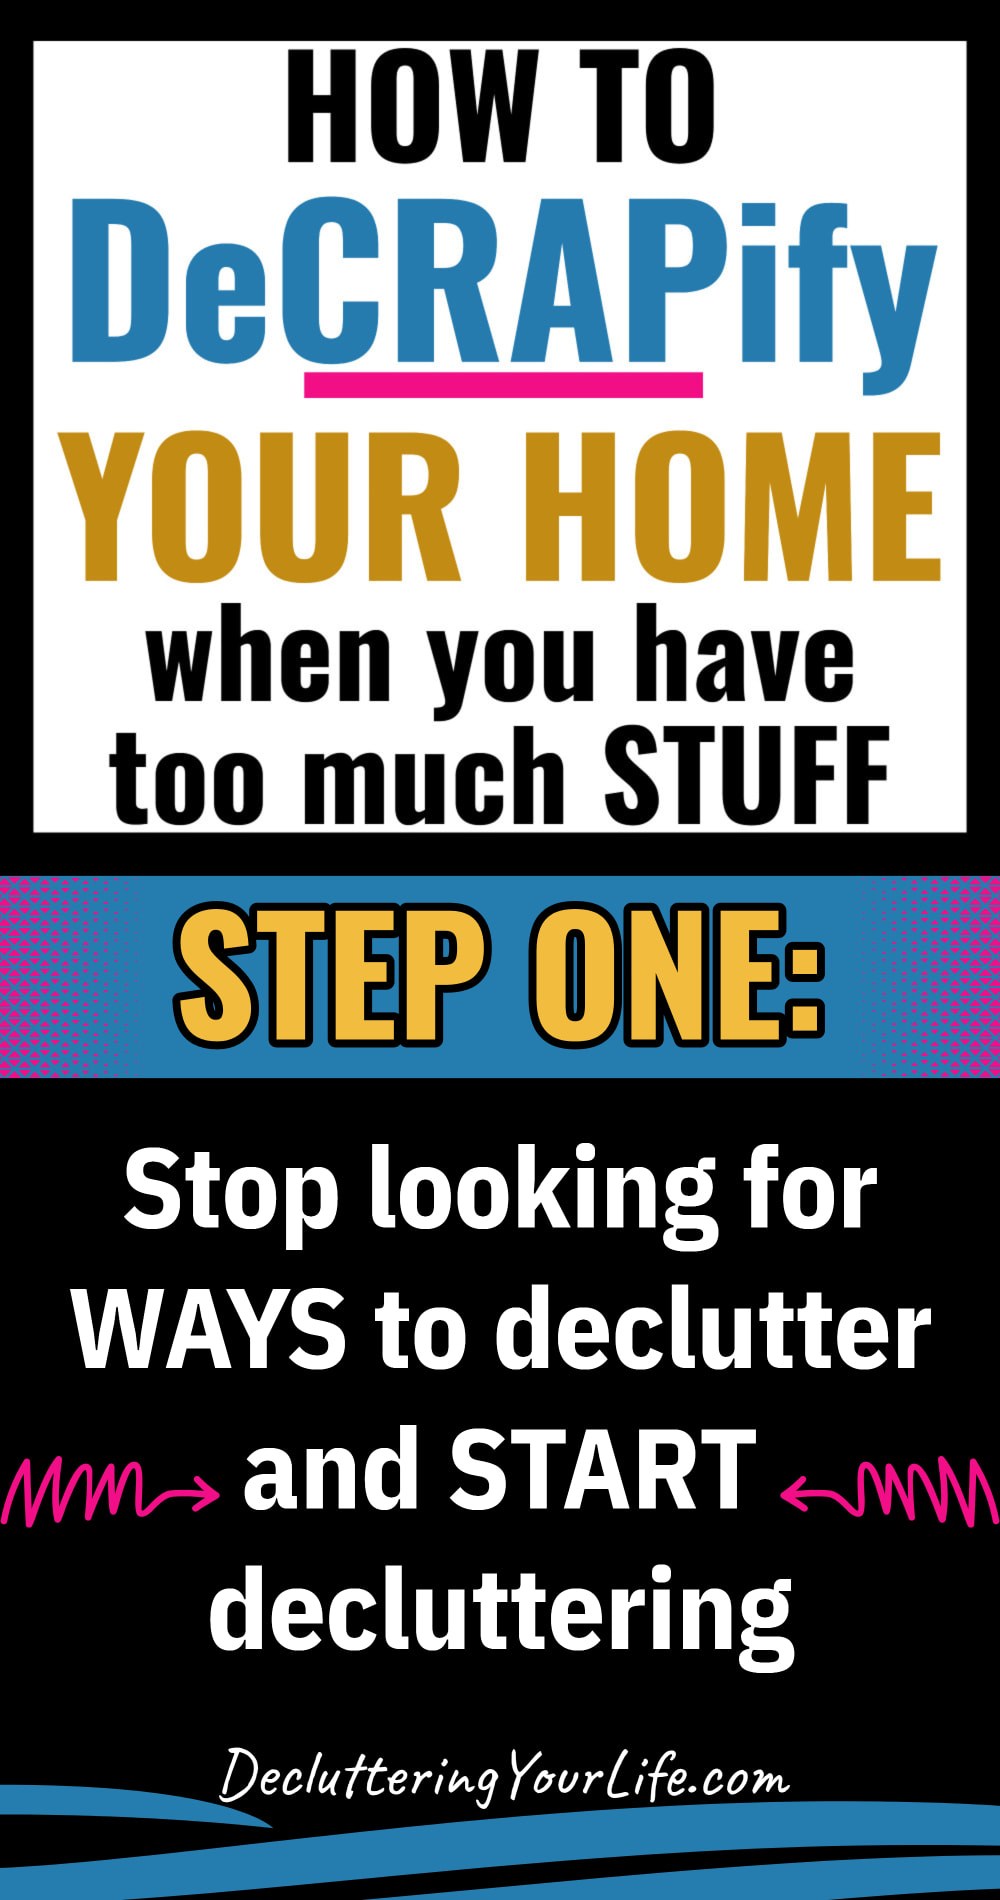 Decrapify your home step 1 - START decluttering